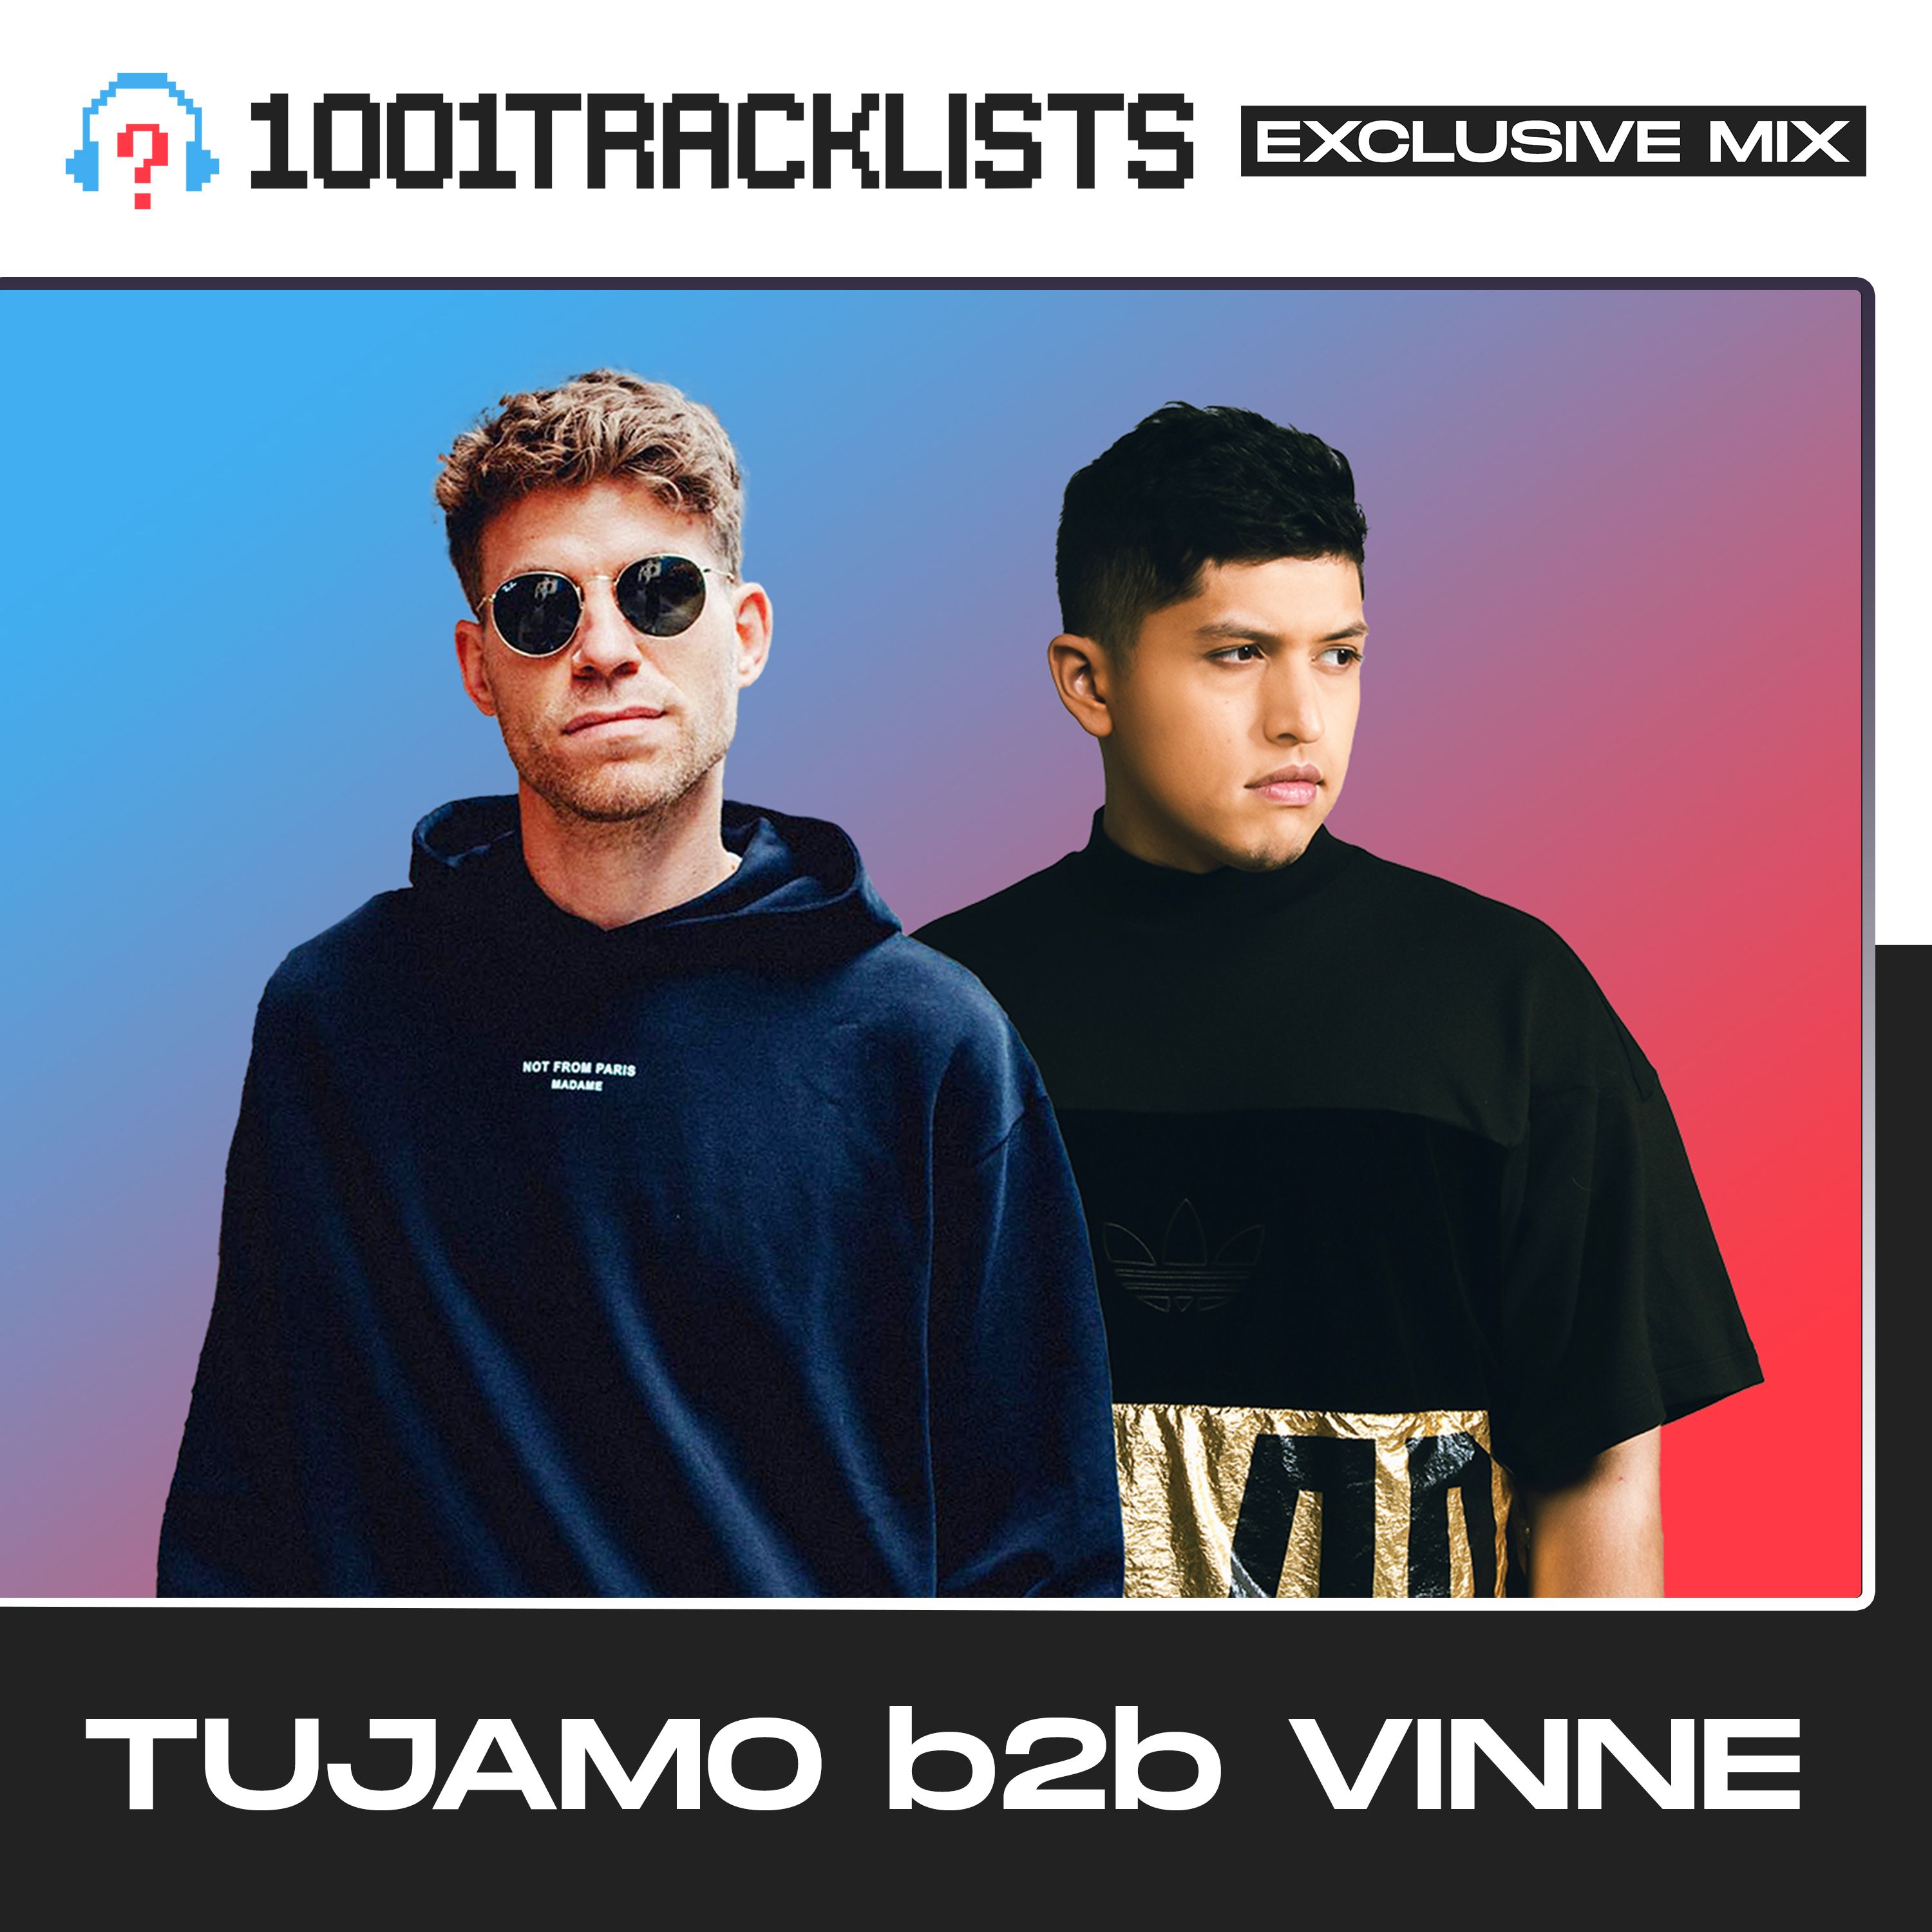 TUJAMO b2b VINNE - 1001Tracklists ‘Techno Party’ Exclusive Mix